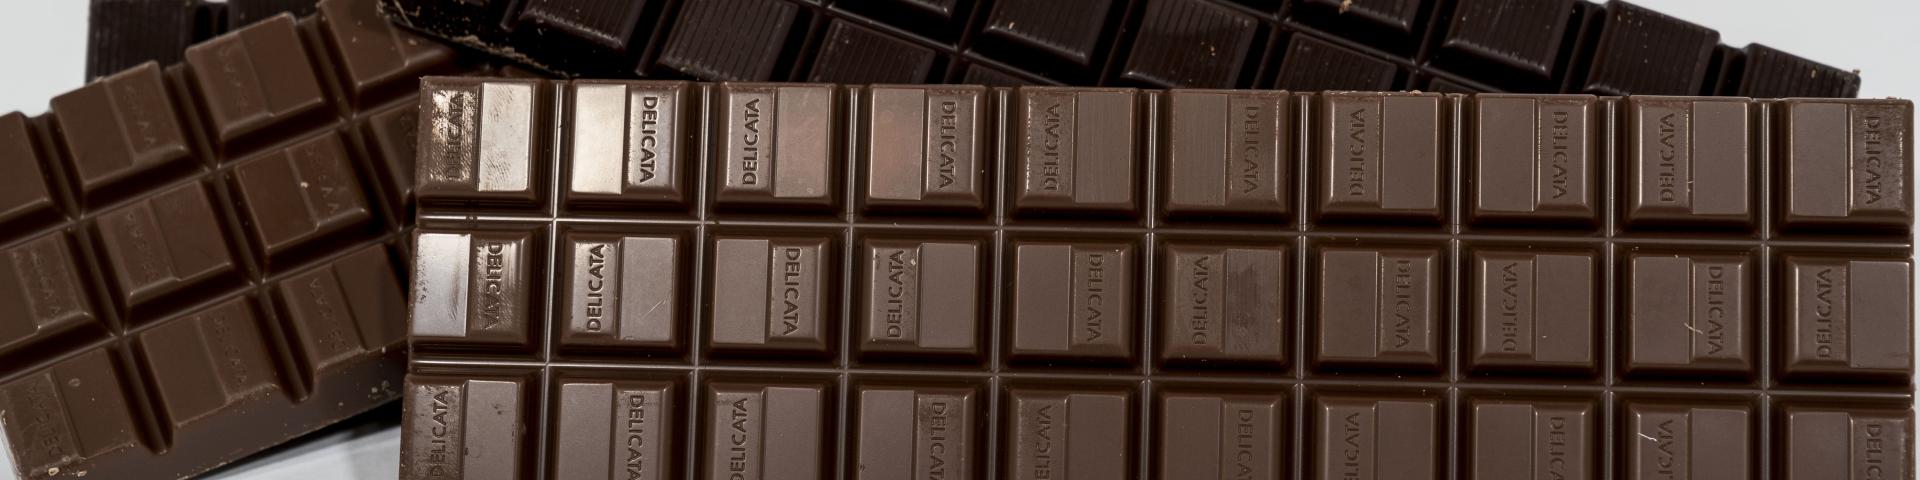 Chocolate bar - Wikipedia